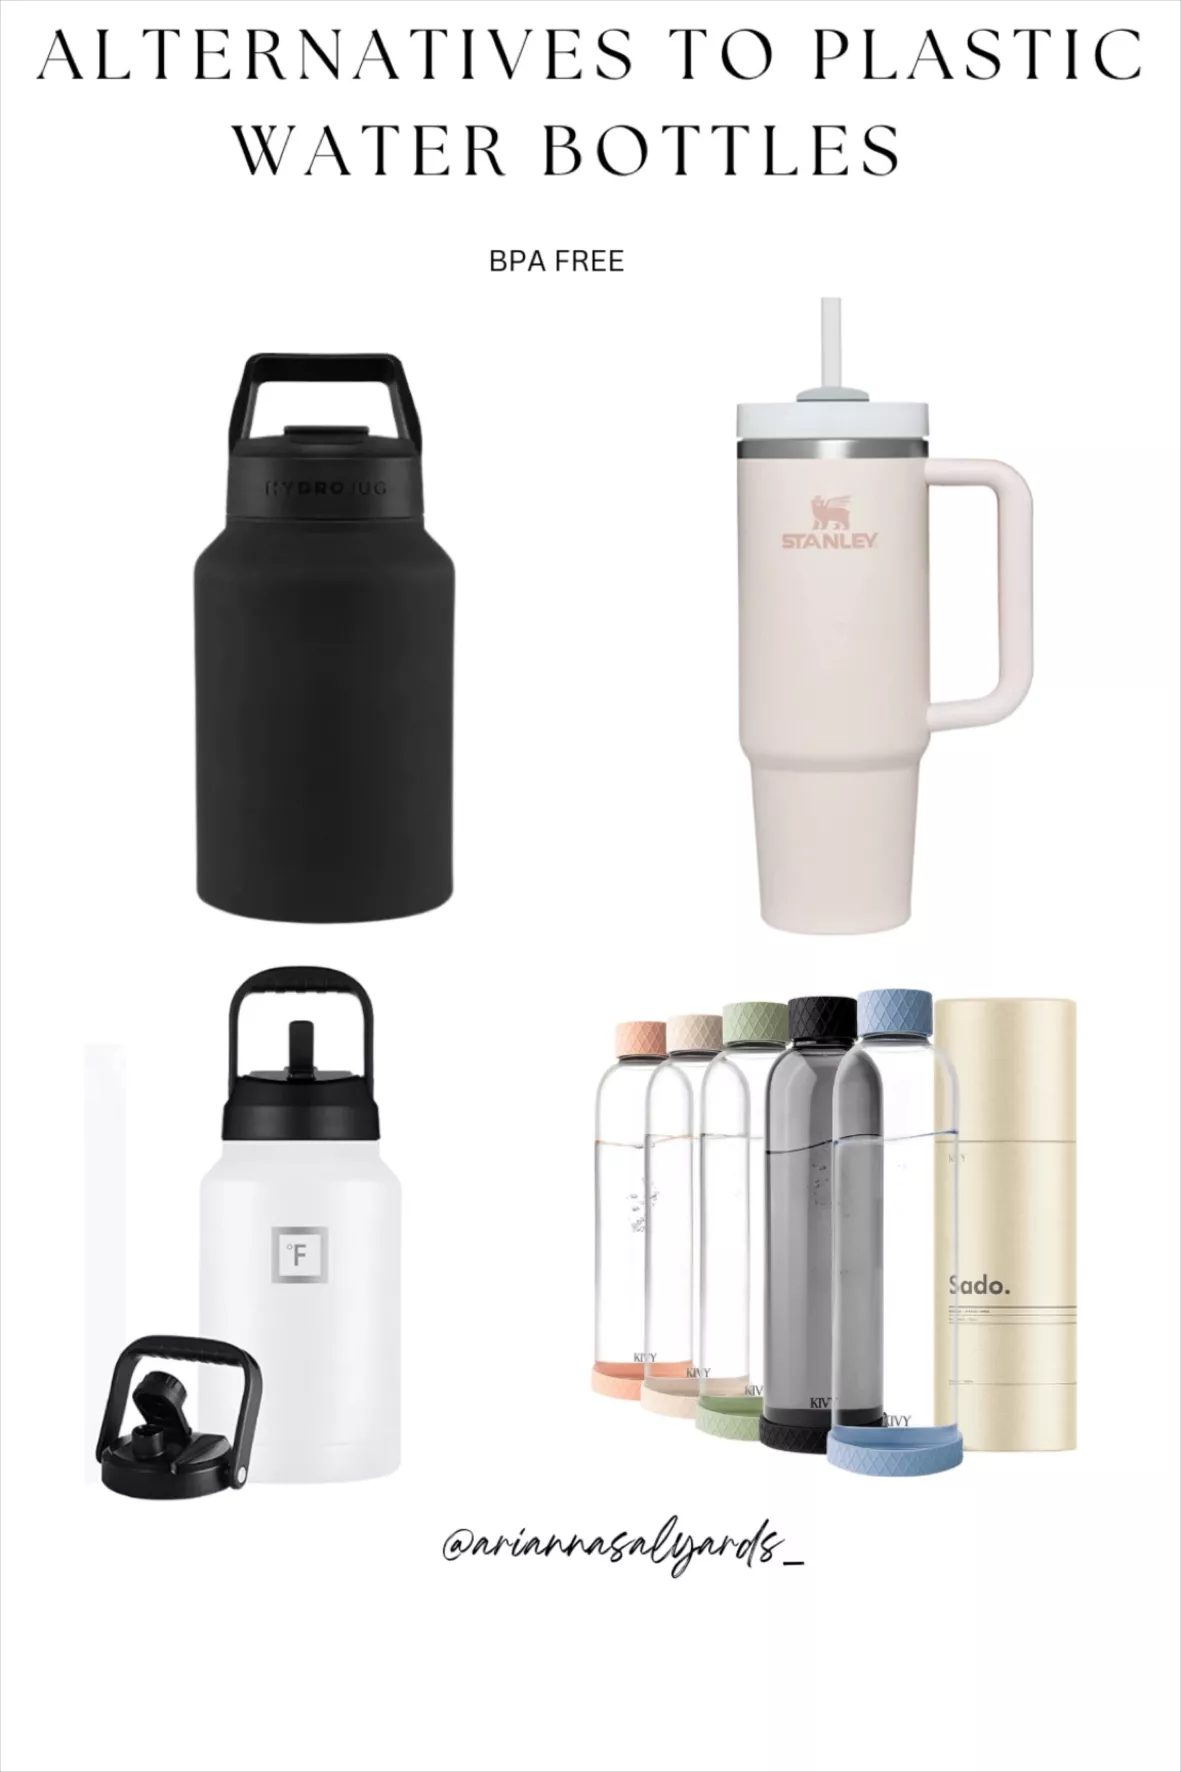 Alternatives to plastic water bottles